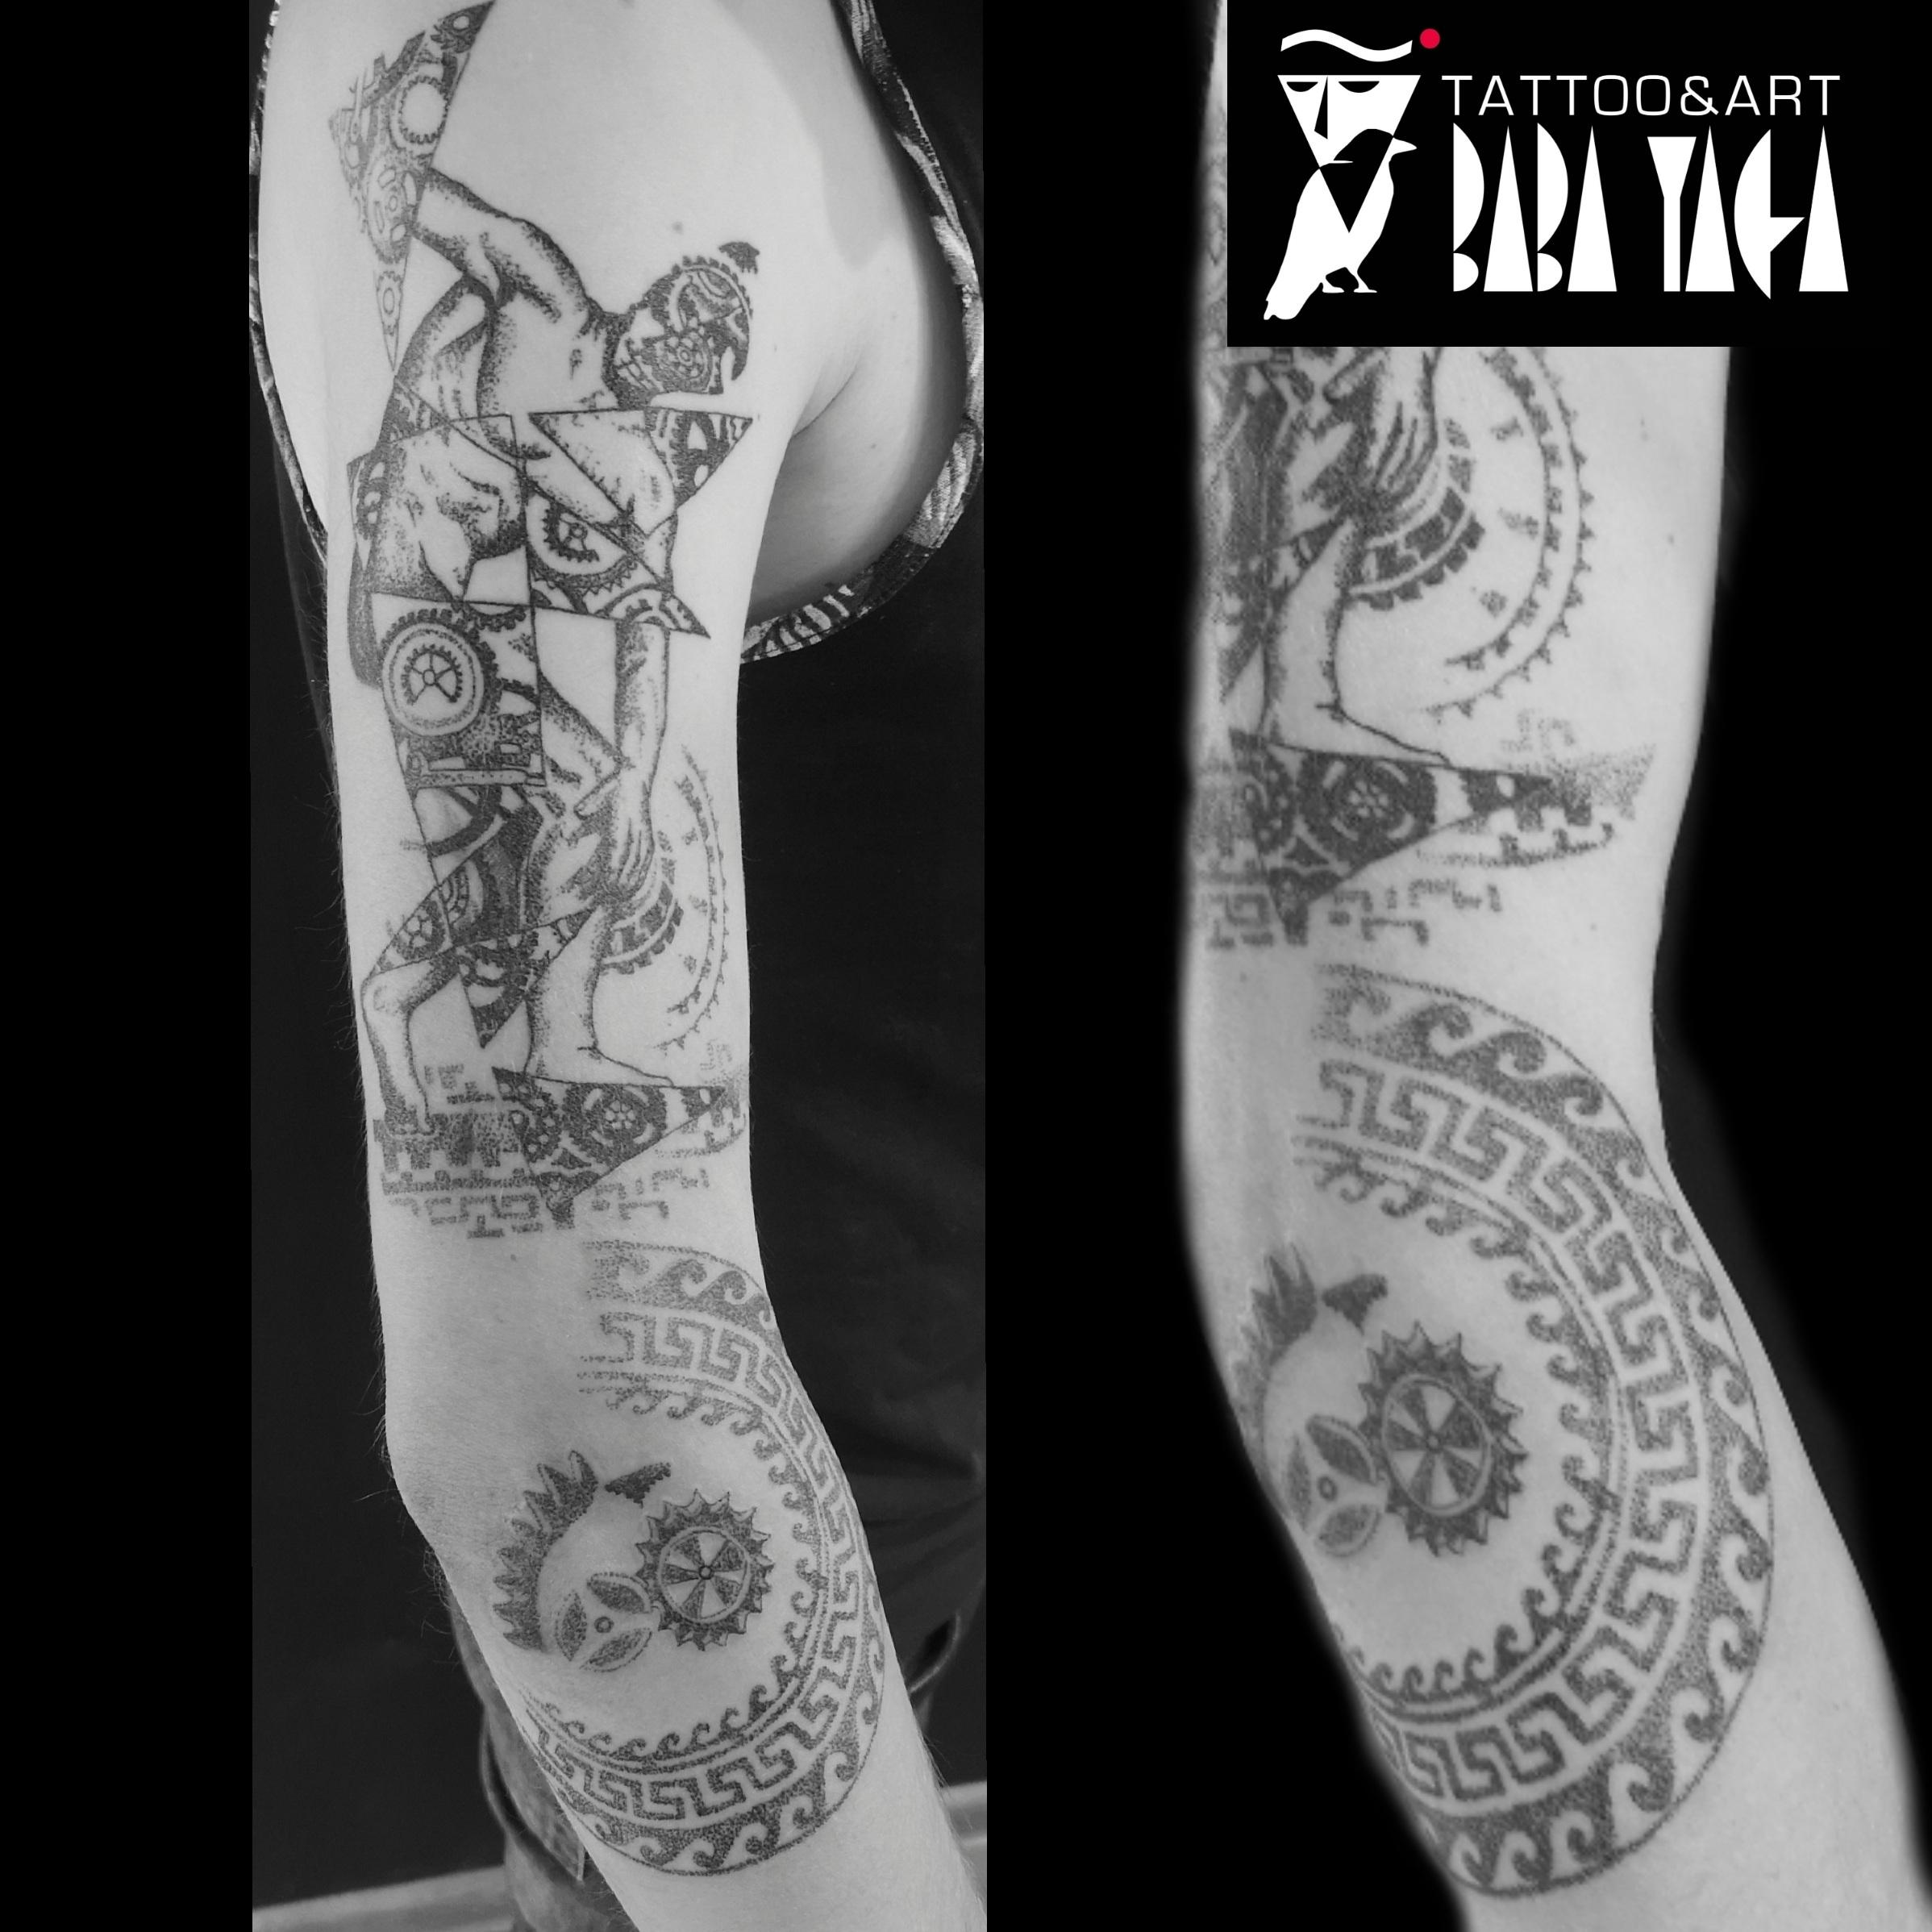 Inksearch tattoo Baba Yaga tattoo&art